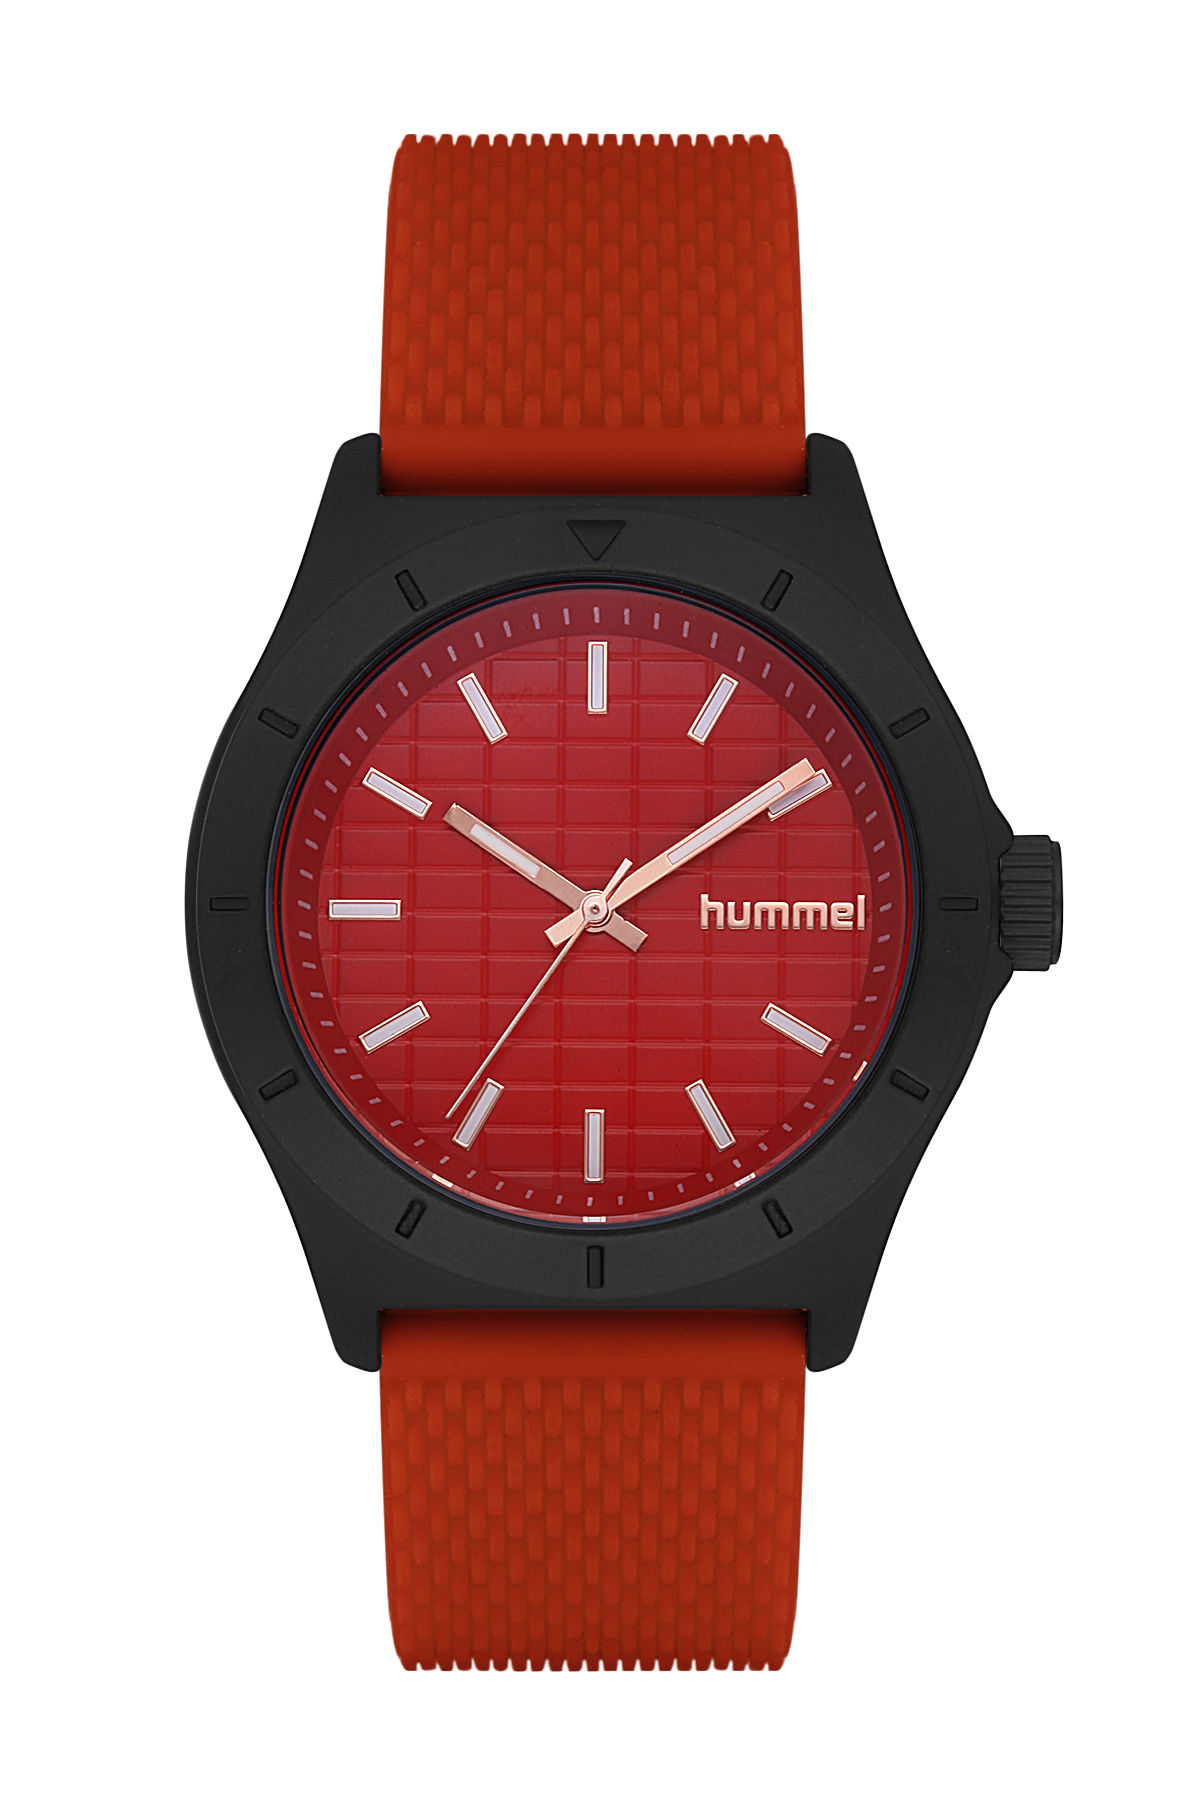 HUMMEL HM-3003MA-4